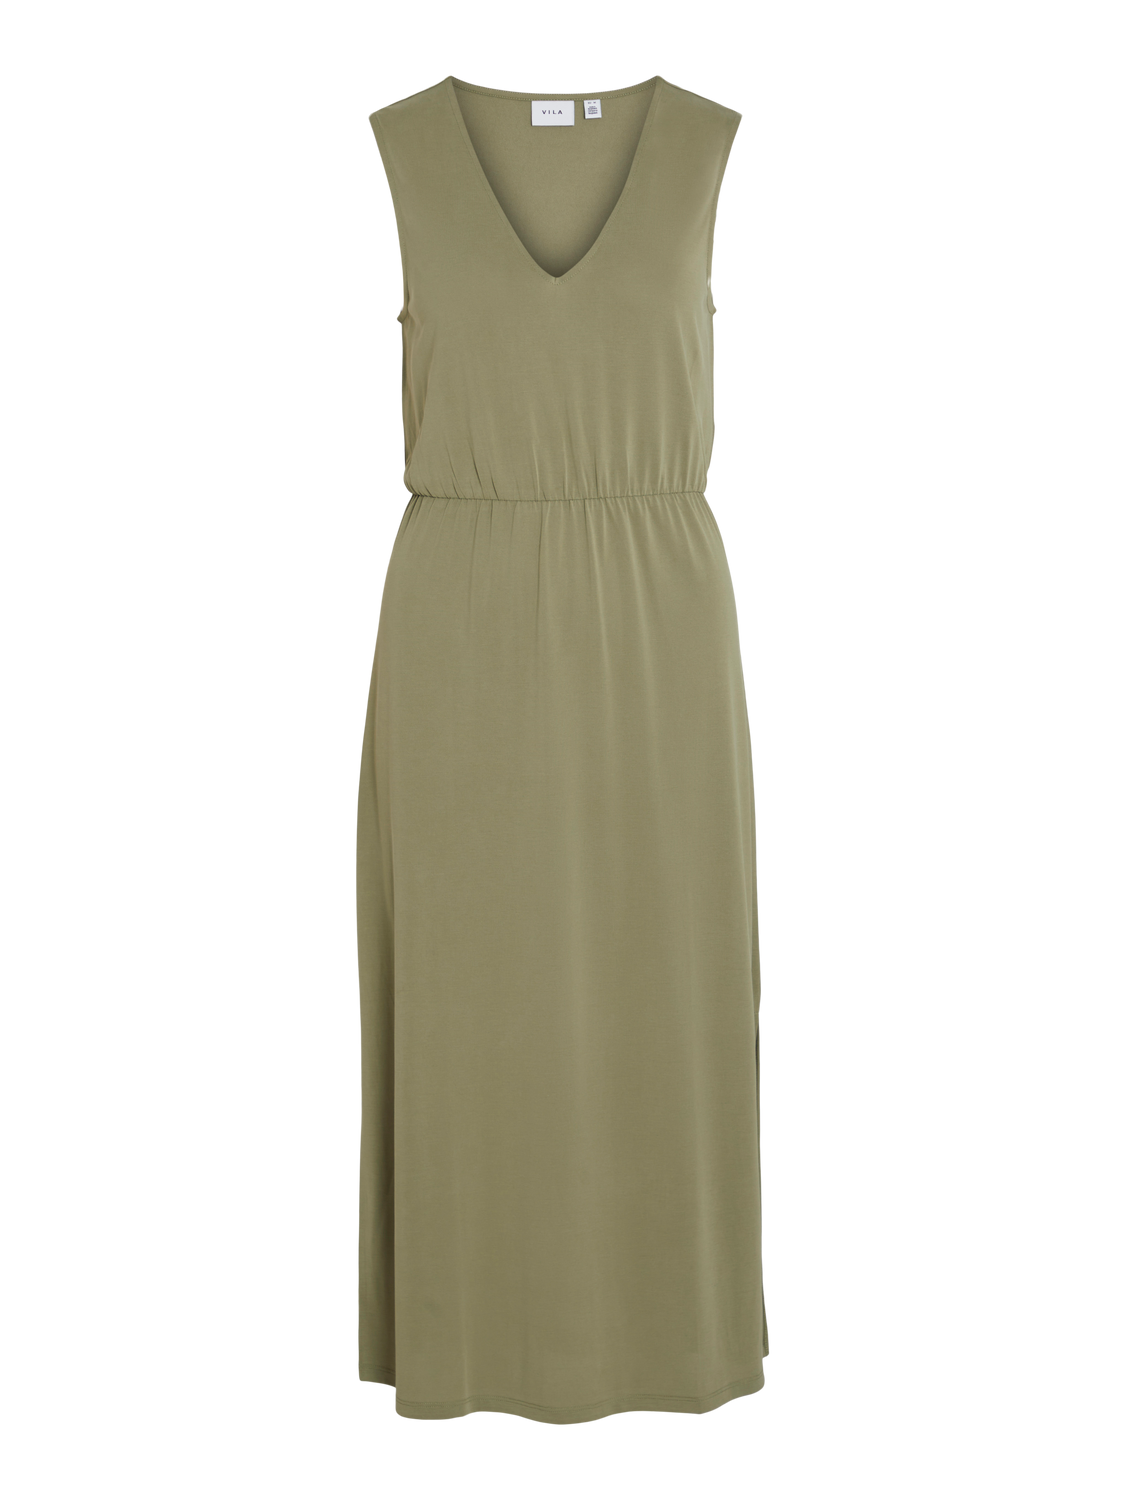 VIMODALA Dress - Oil Green